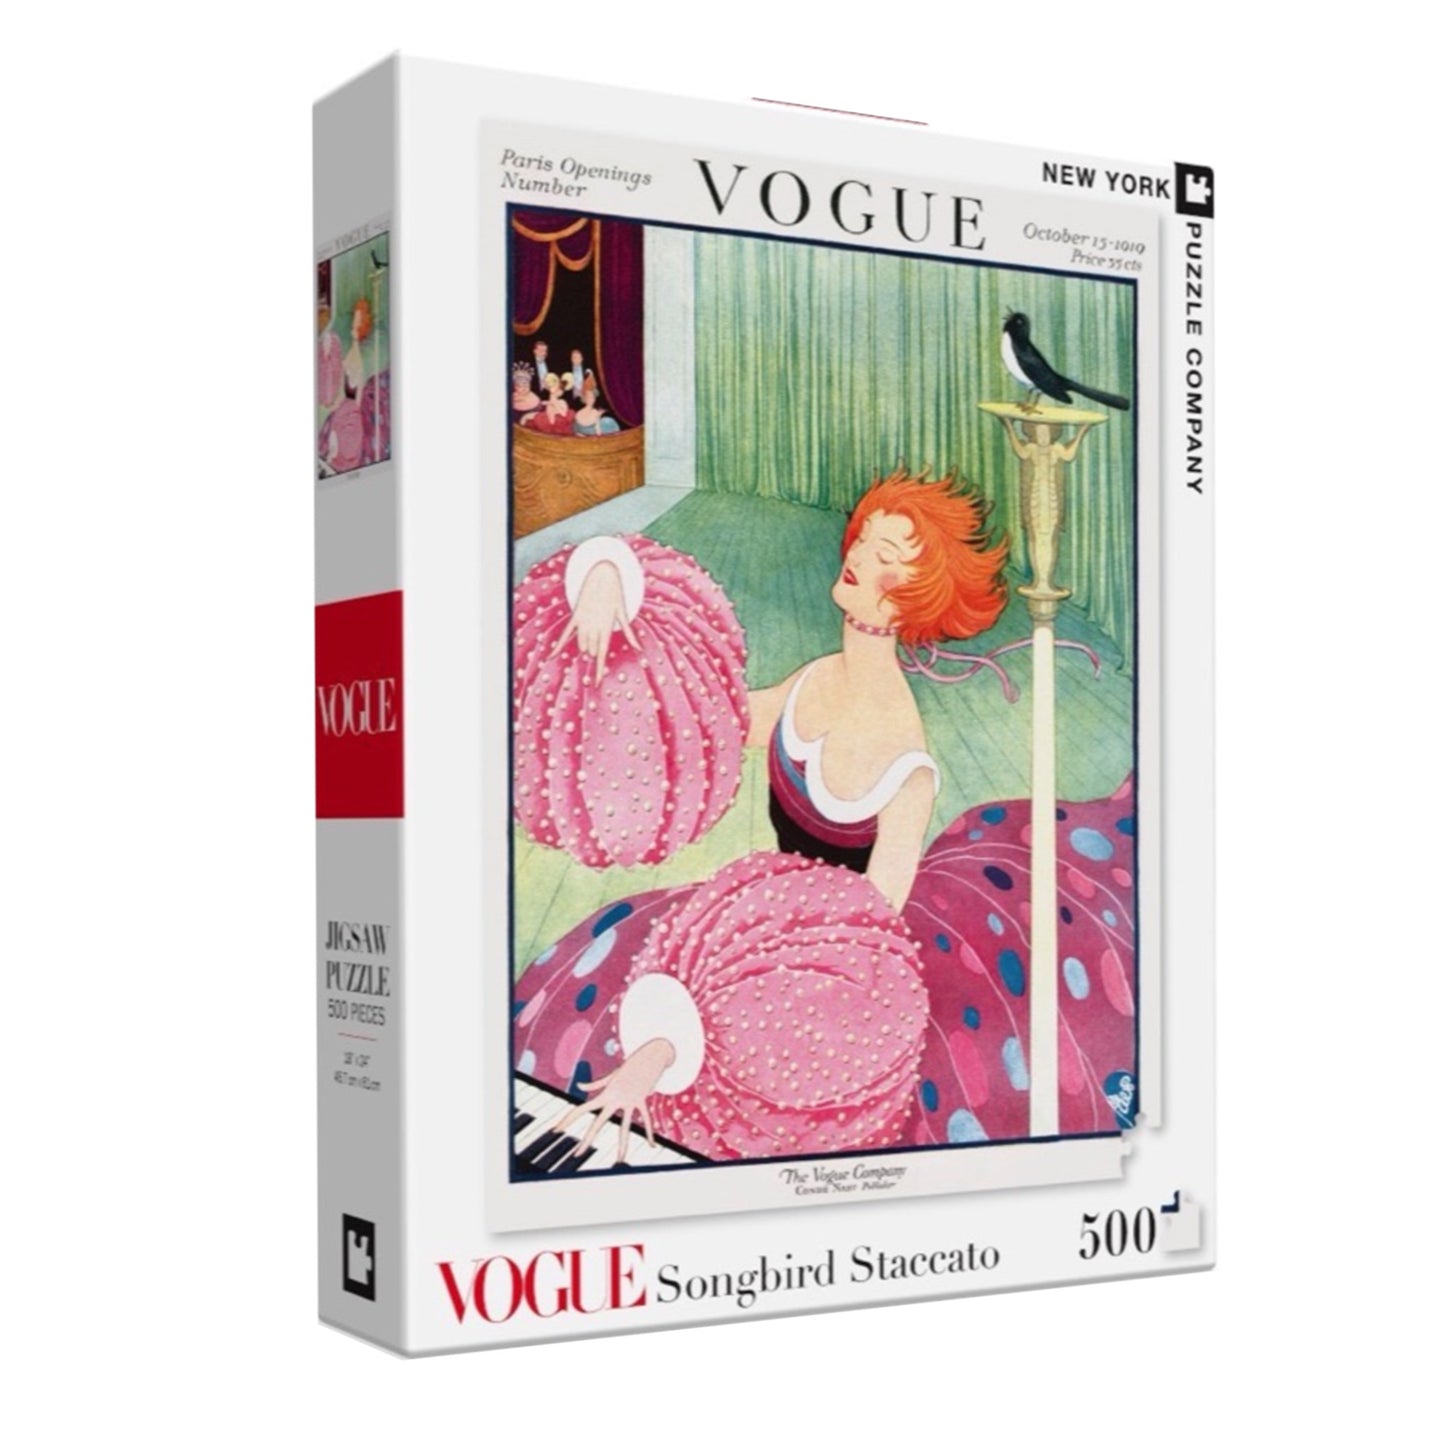 Vogue, Songbird Staccato Puzzle